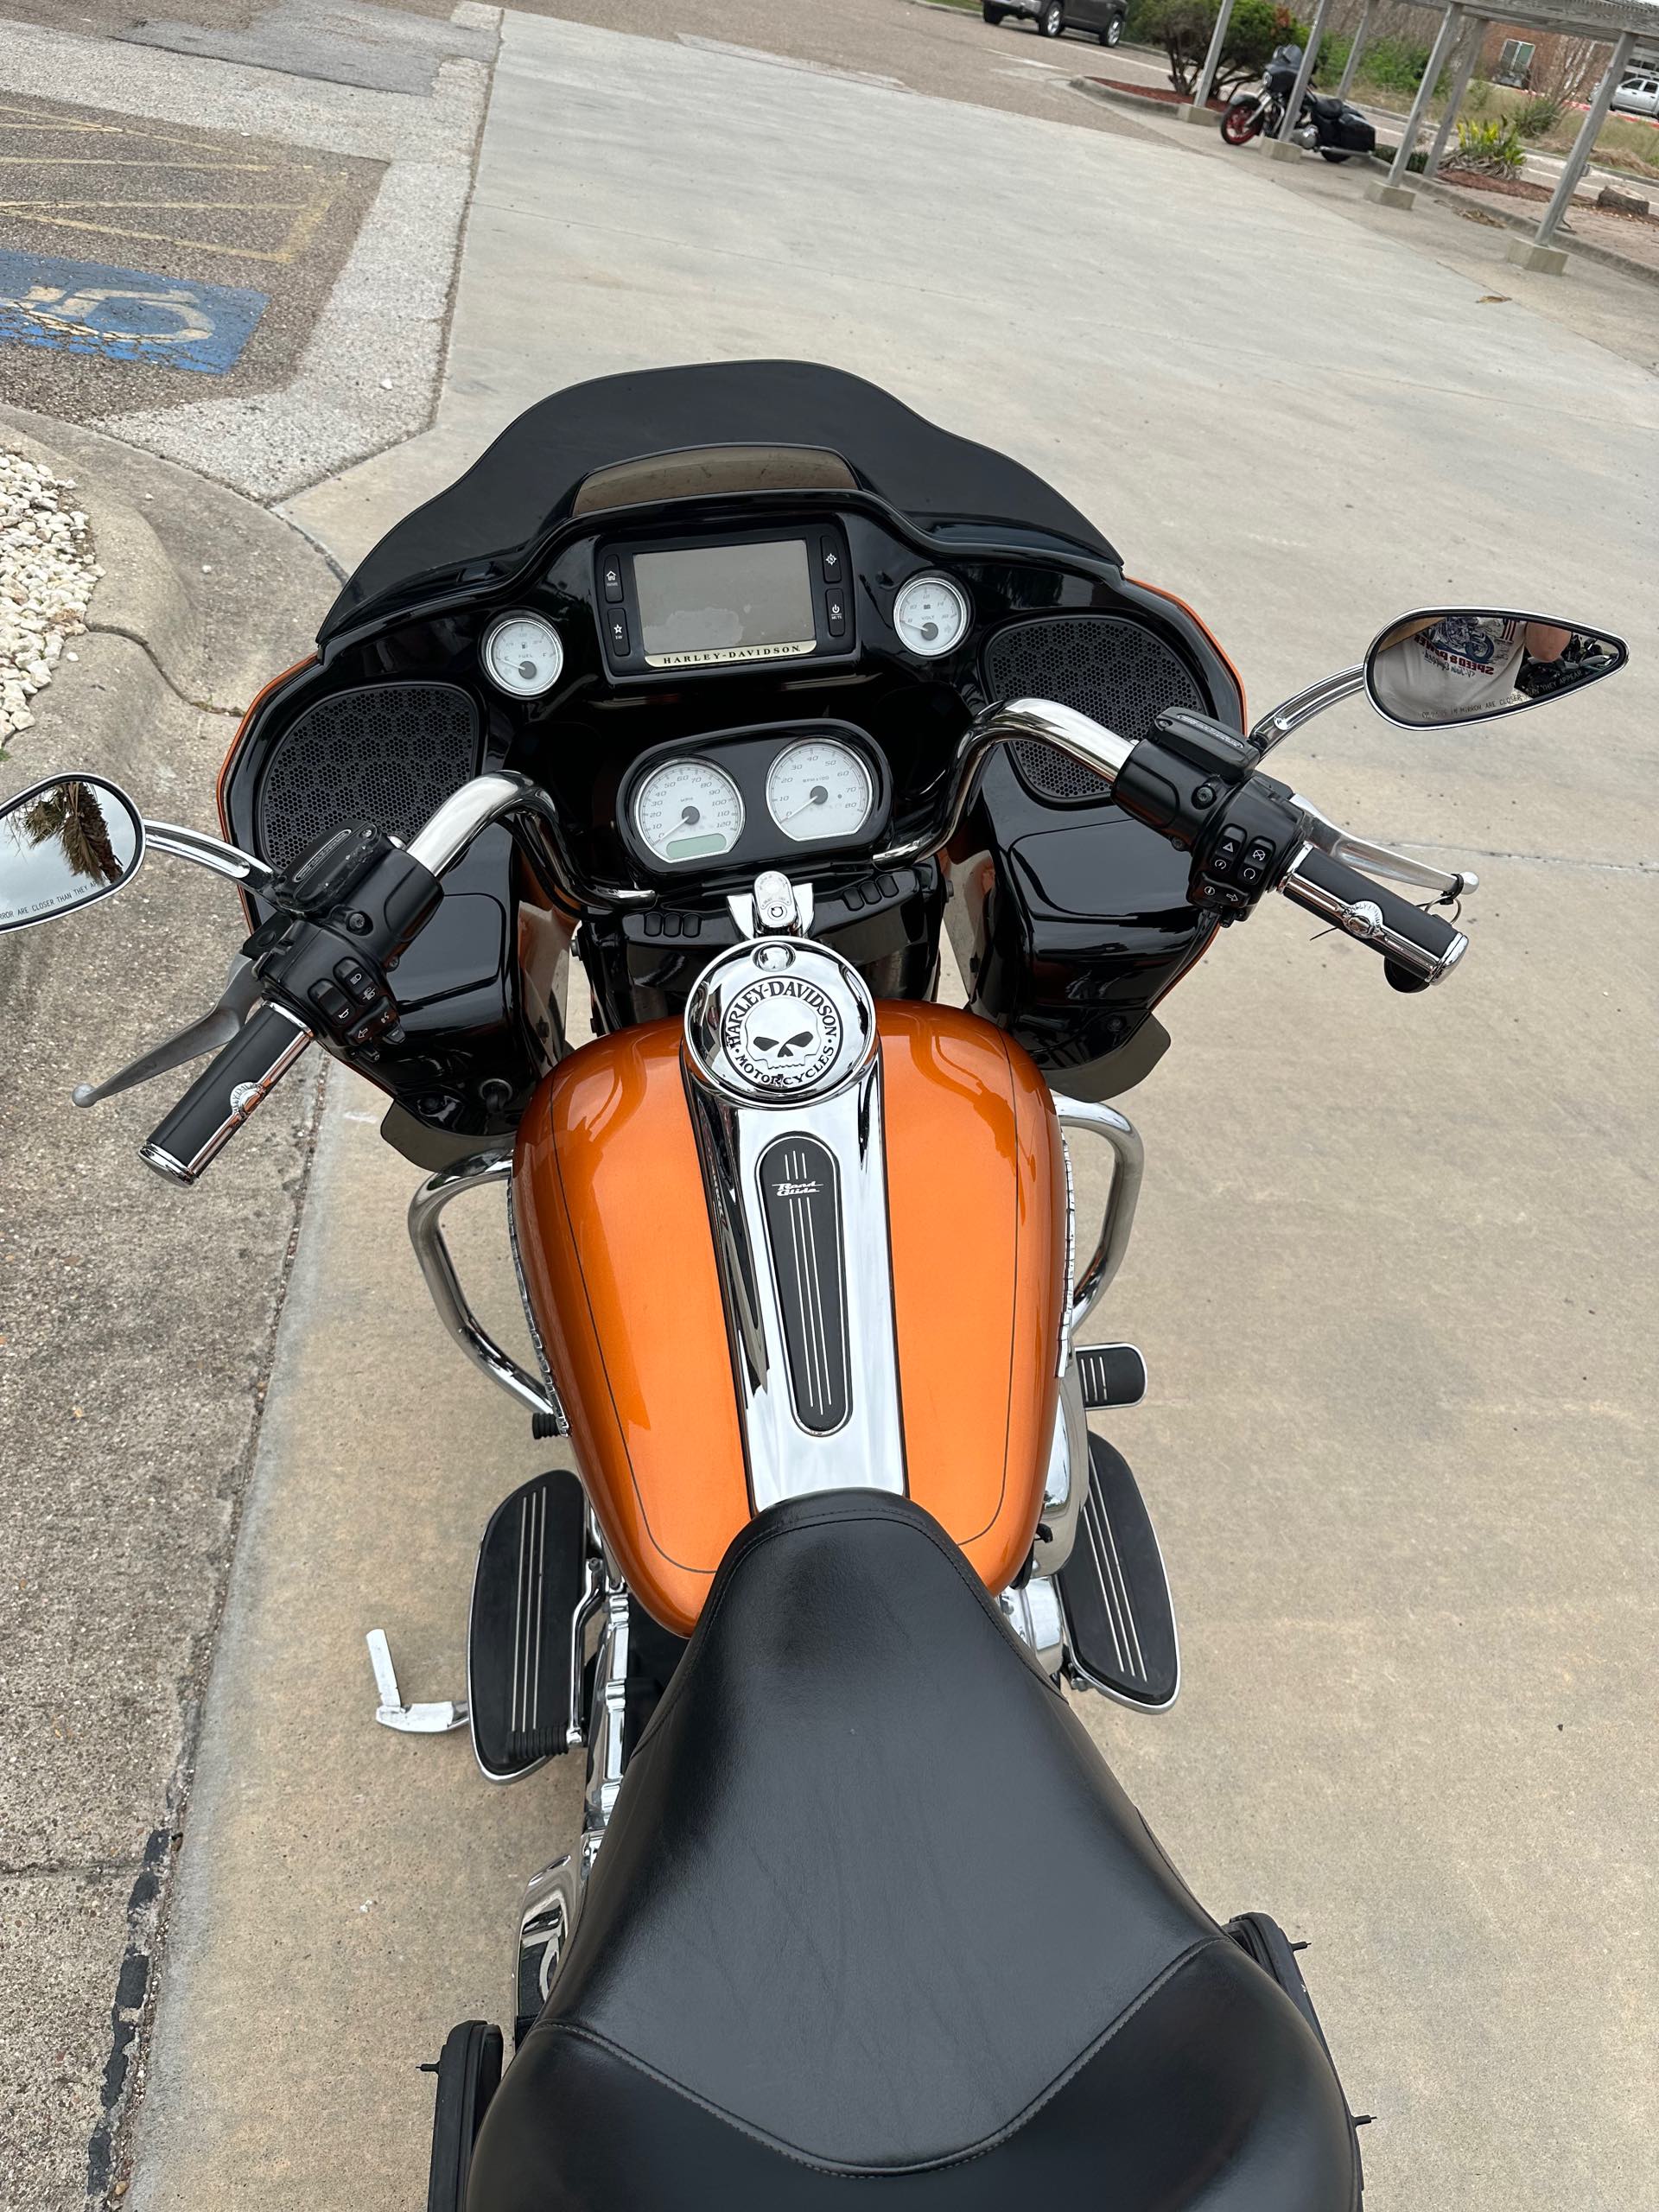 2015 Harley-Davidson Road Glide Special at Corpus Christi Harley Davidson